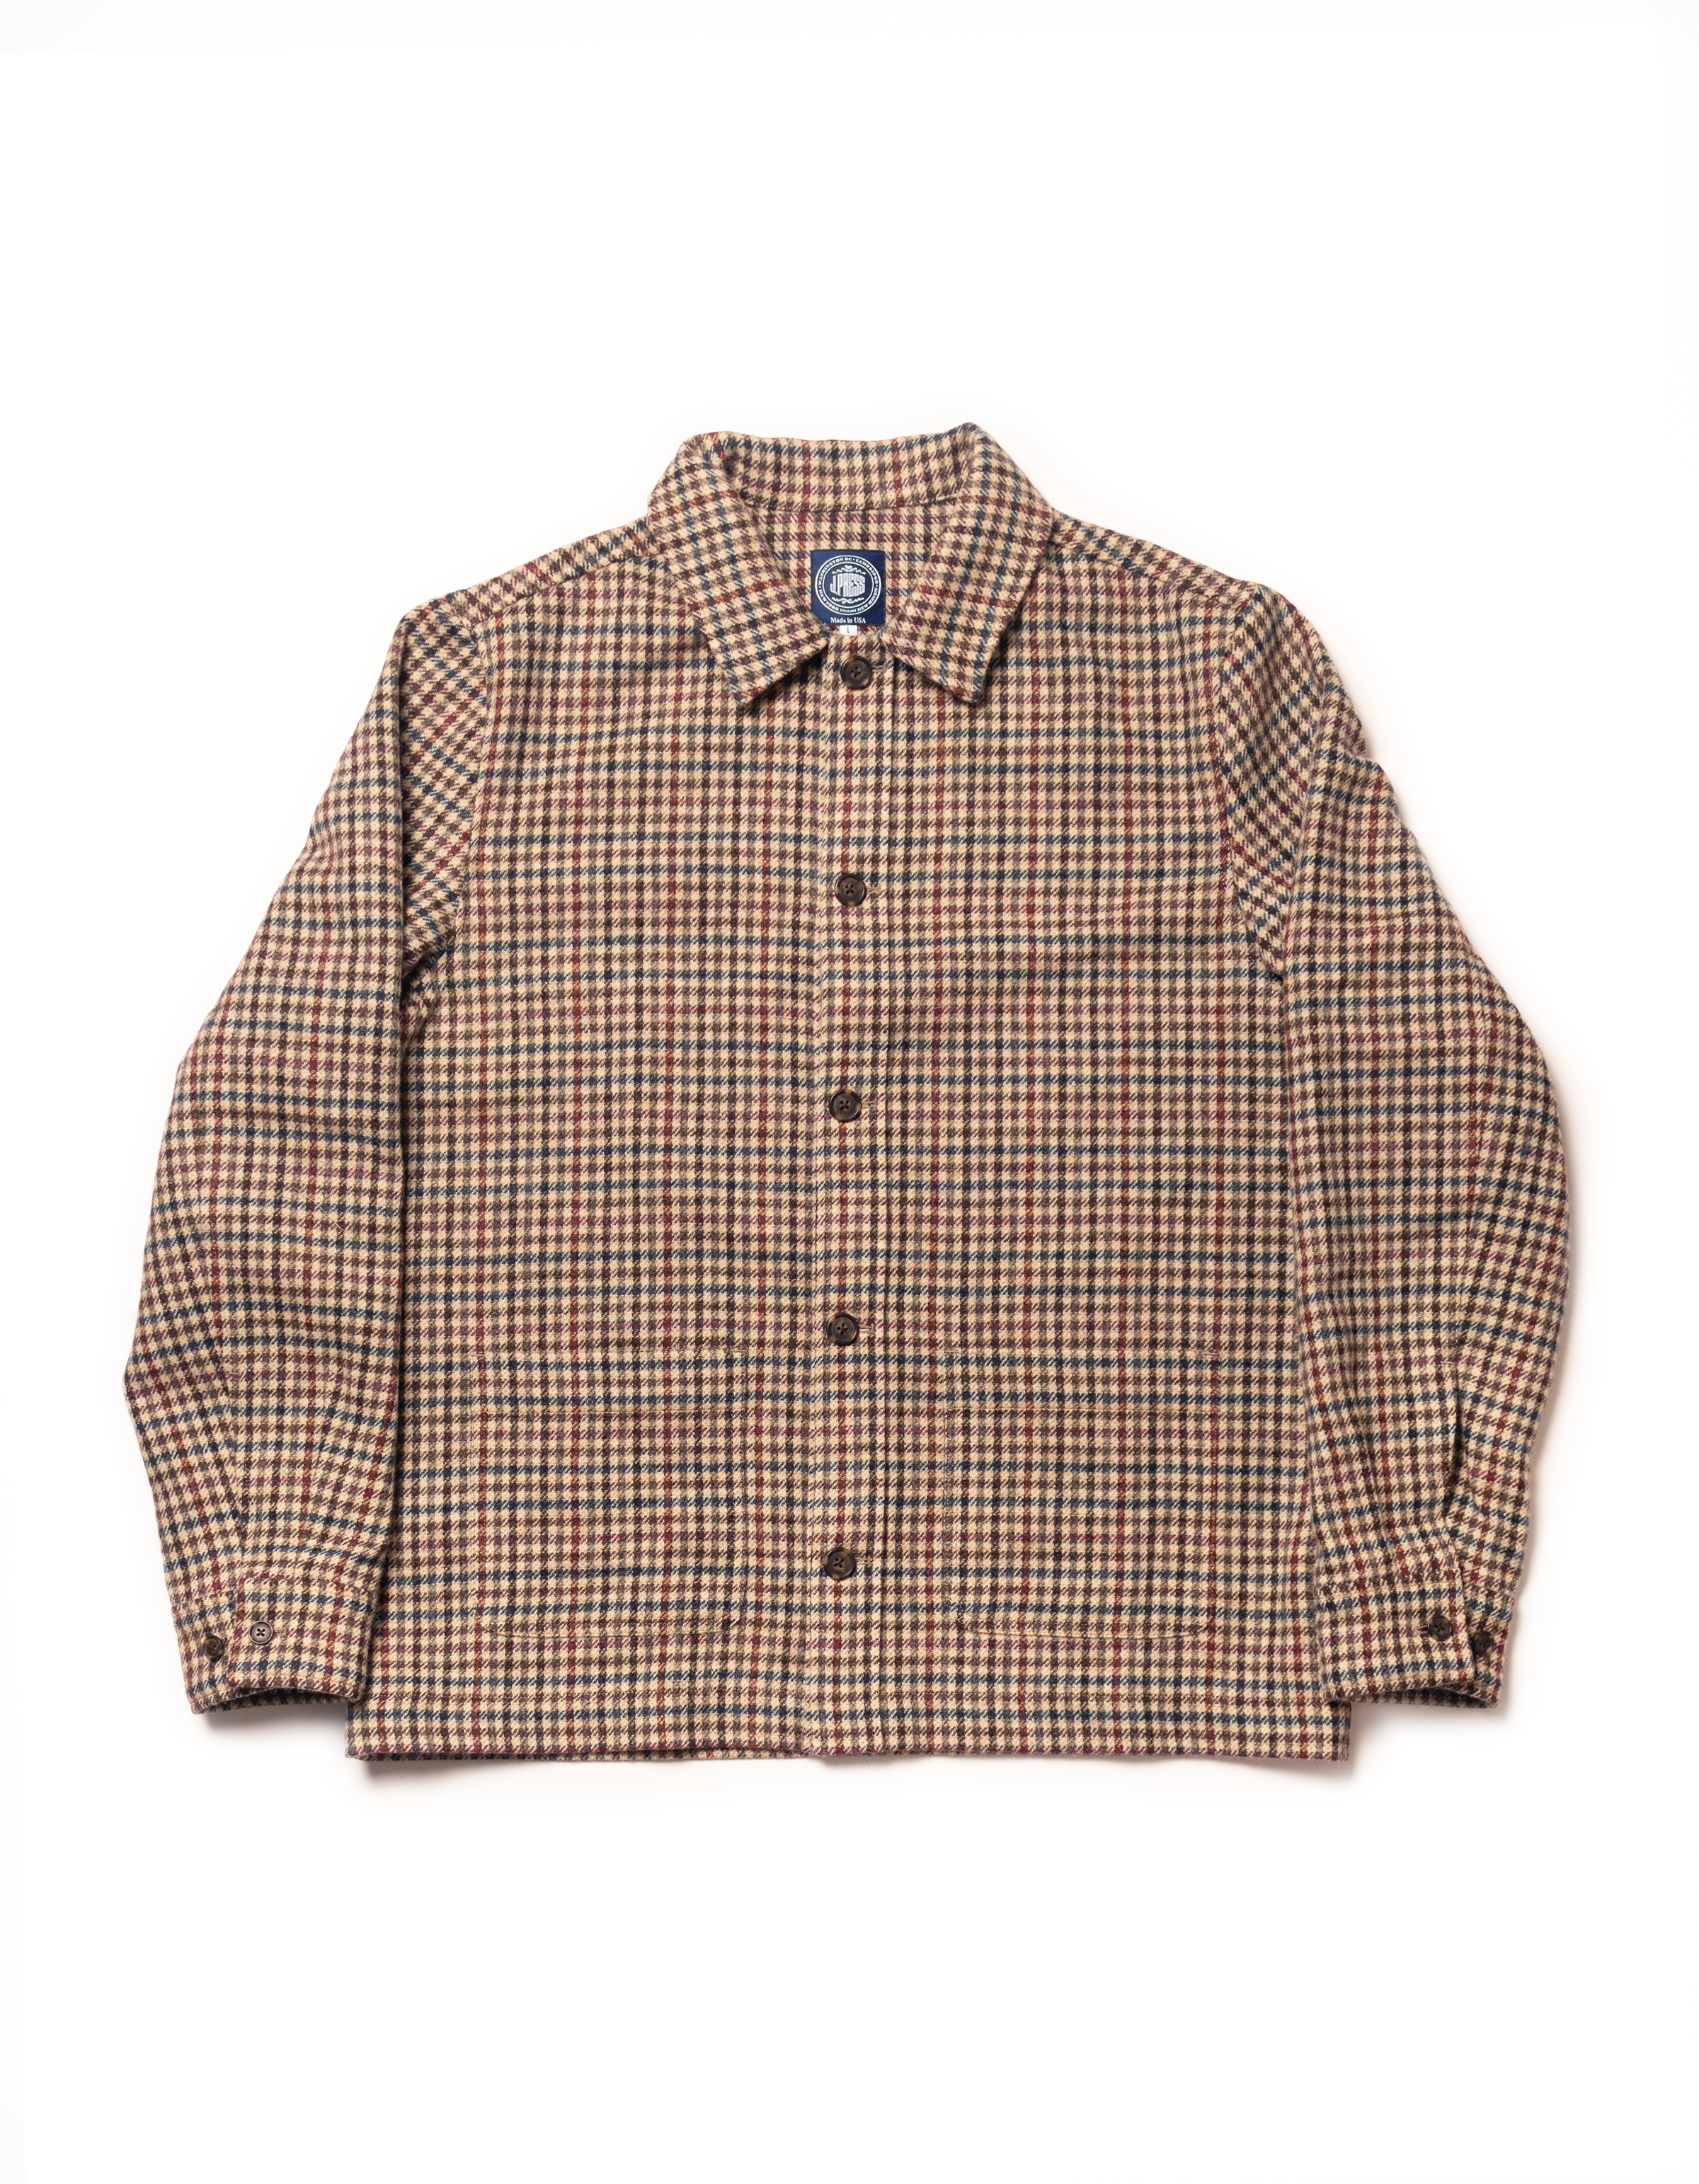 Multi Check Shirt Jacket in Lovat Mill Tweed | J. PRESS